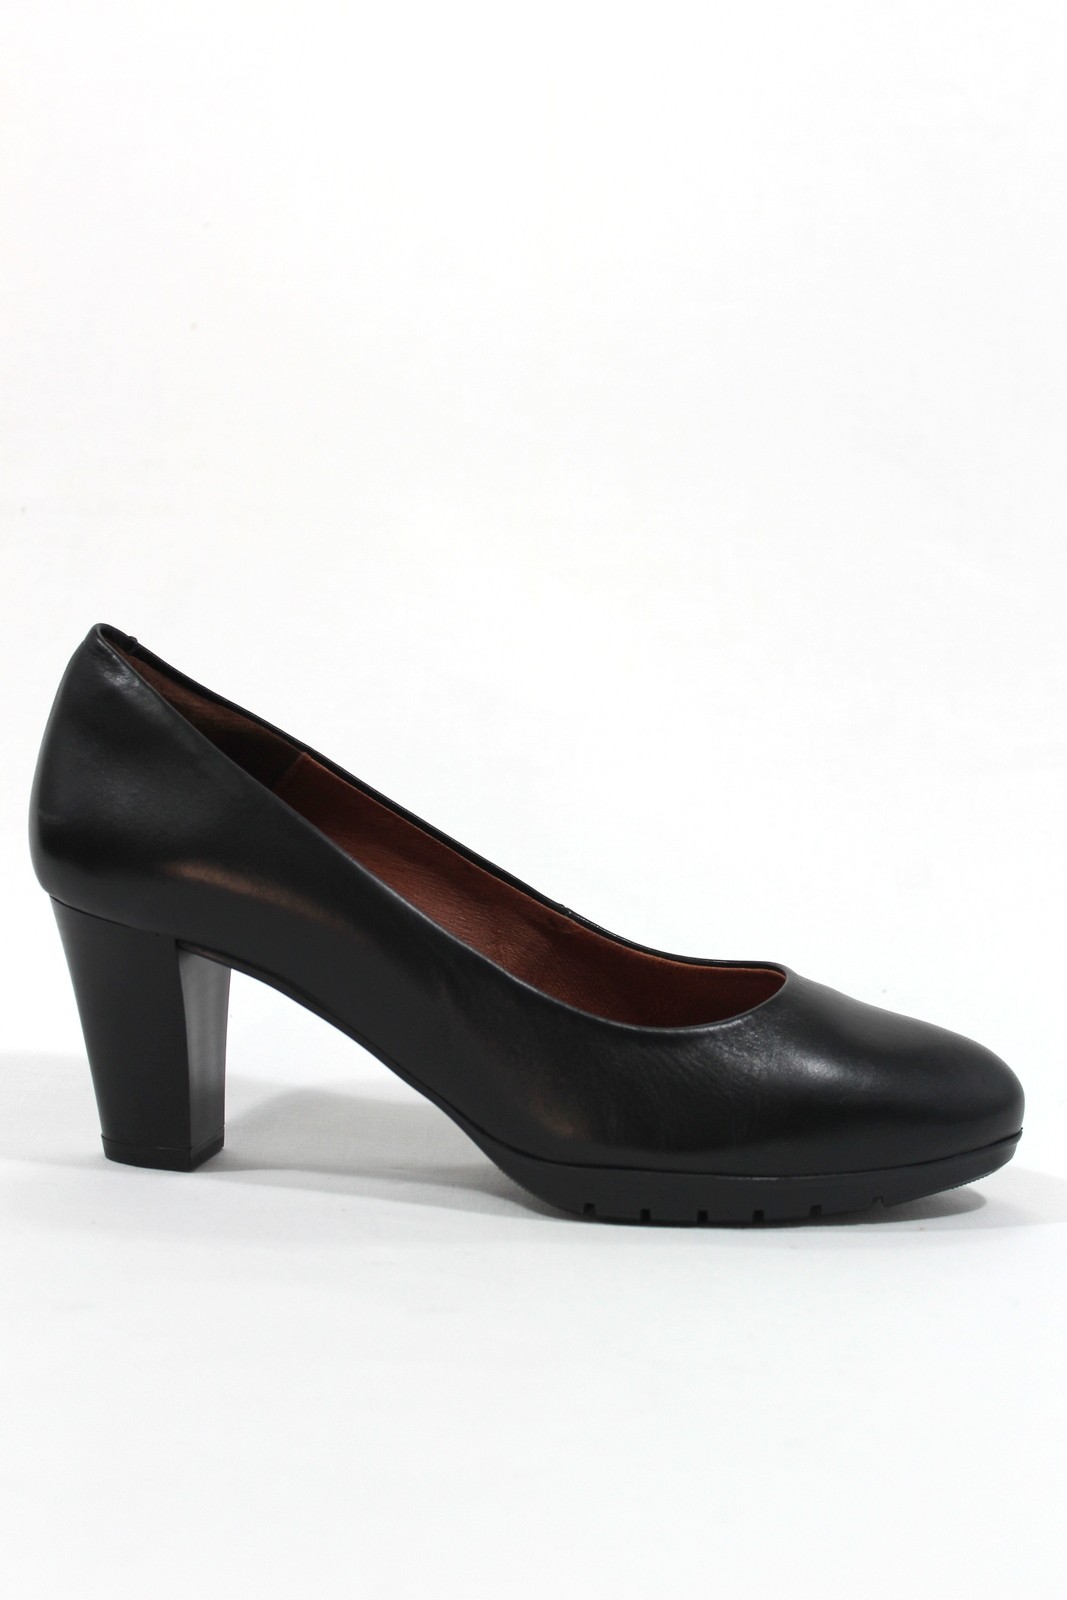 DESIREÉ - Zapato salón piel confortable, ancho 5 cm. Negro.Desireé| Calzados Losada